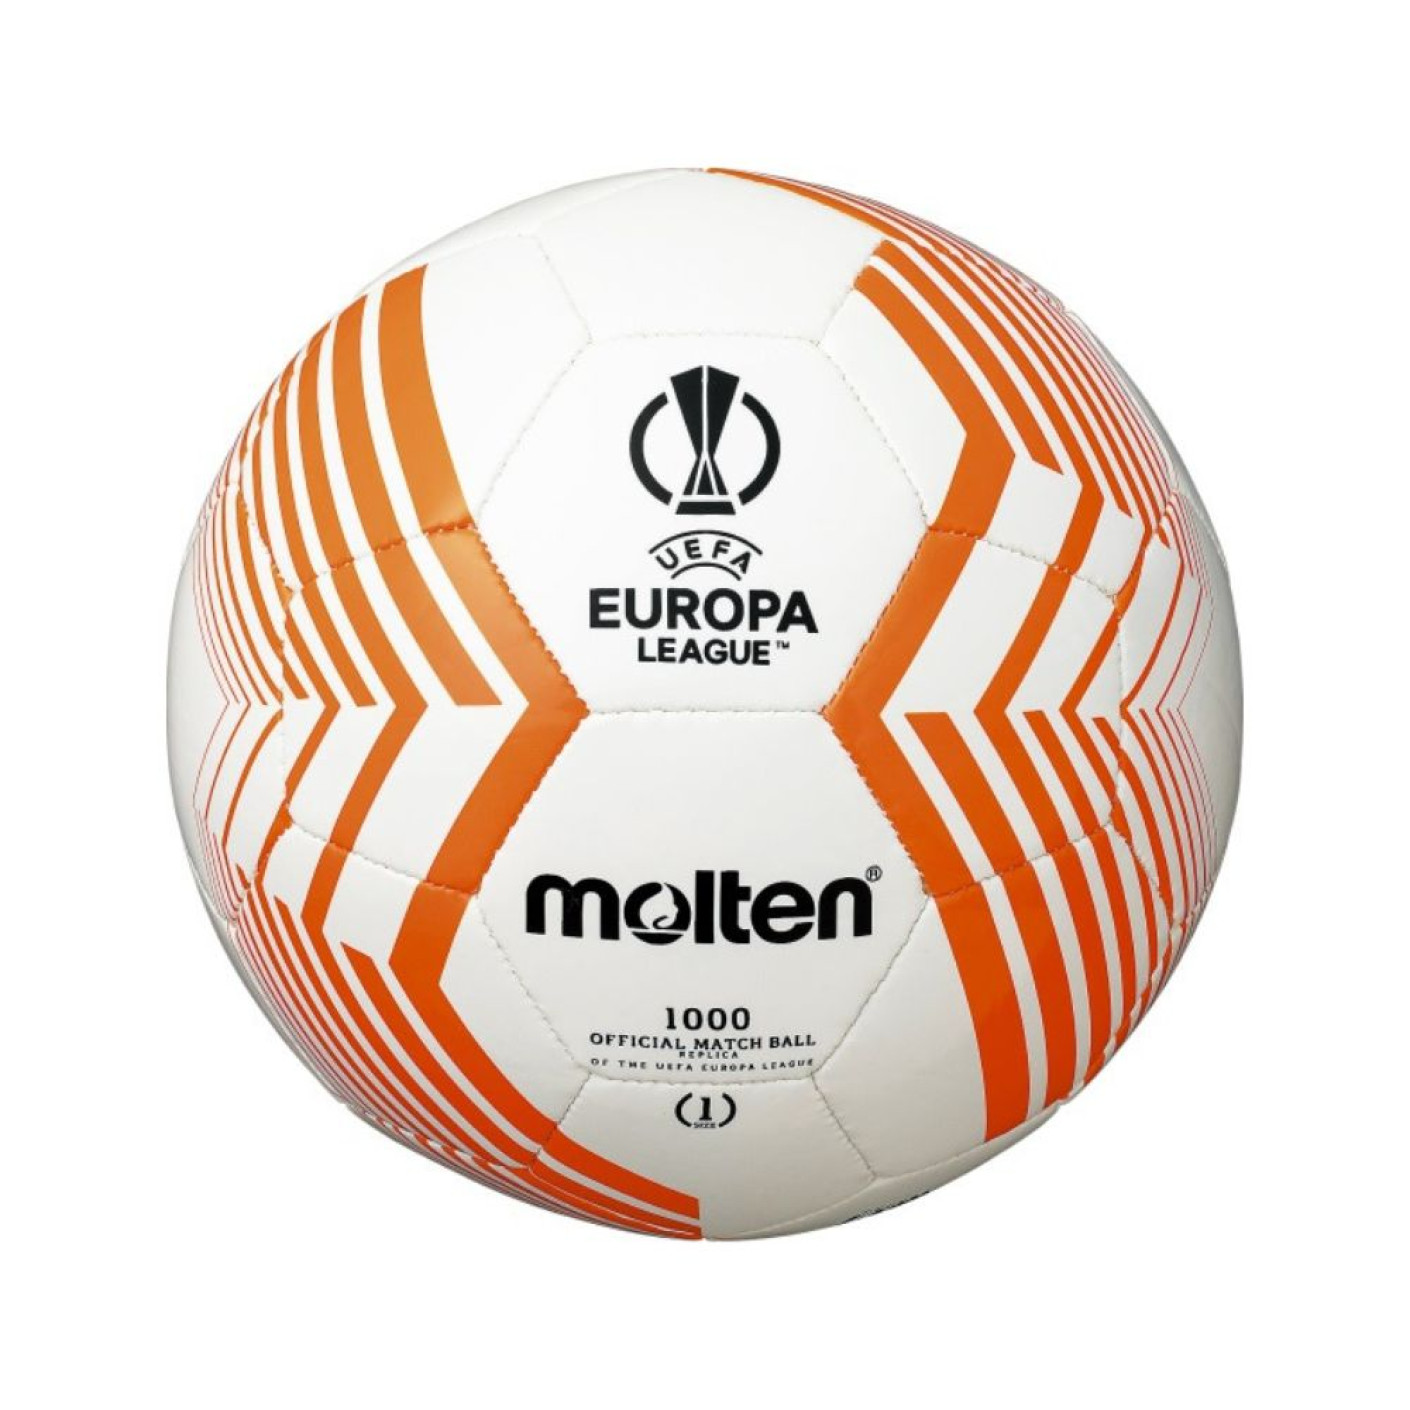 Molten UEFA Europa League Récréation Ballon de Foot Blanc Orange